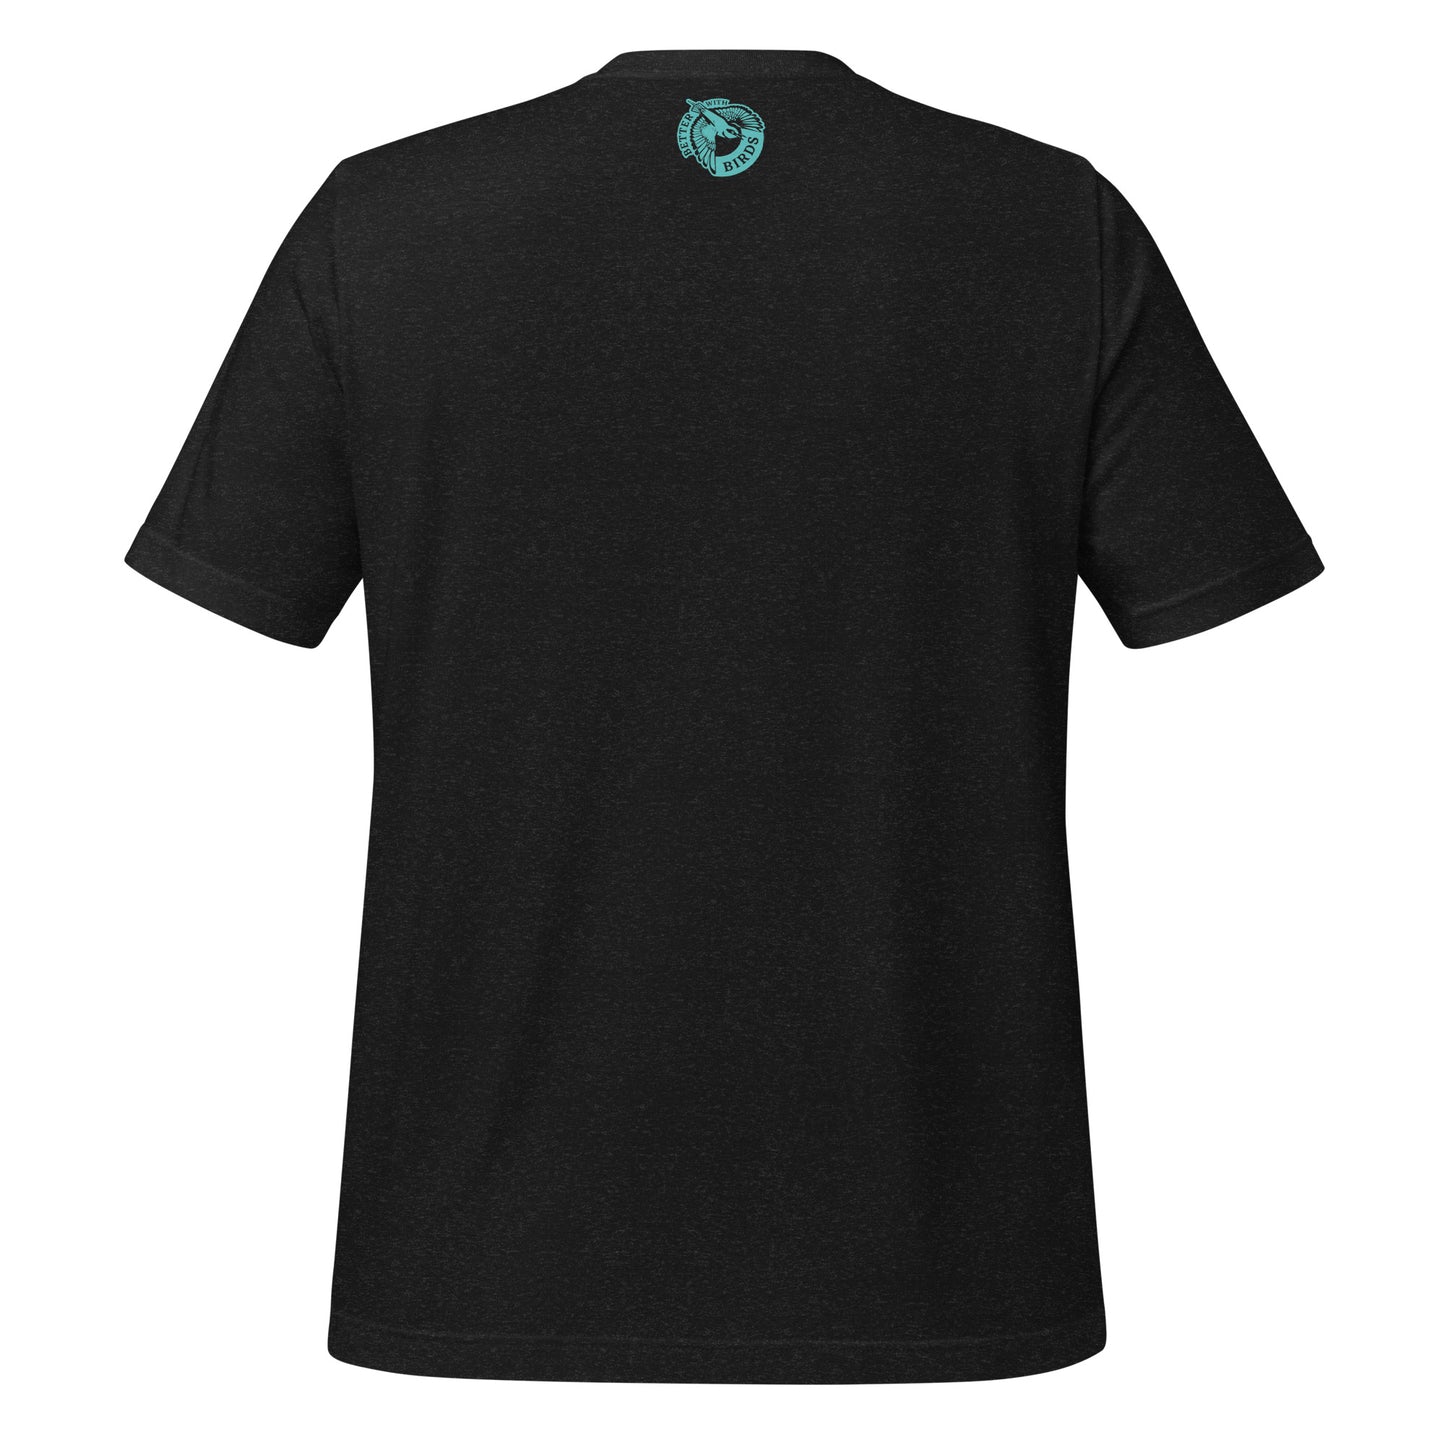 Cormorant Lightweight Cotton Unisex T-Shirt